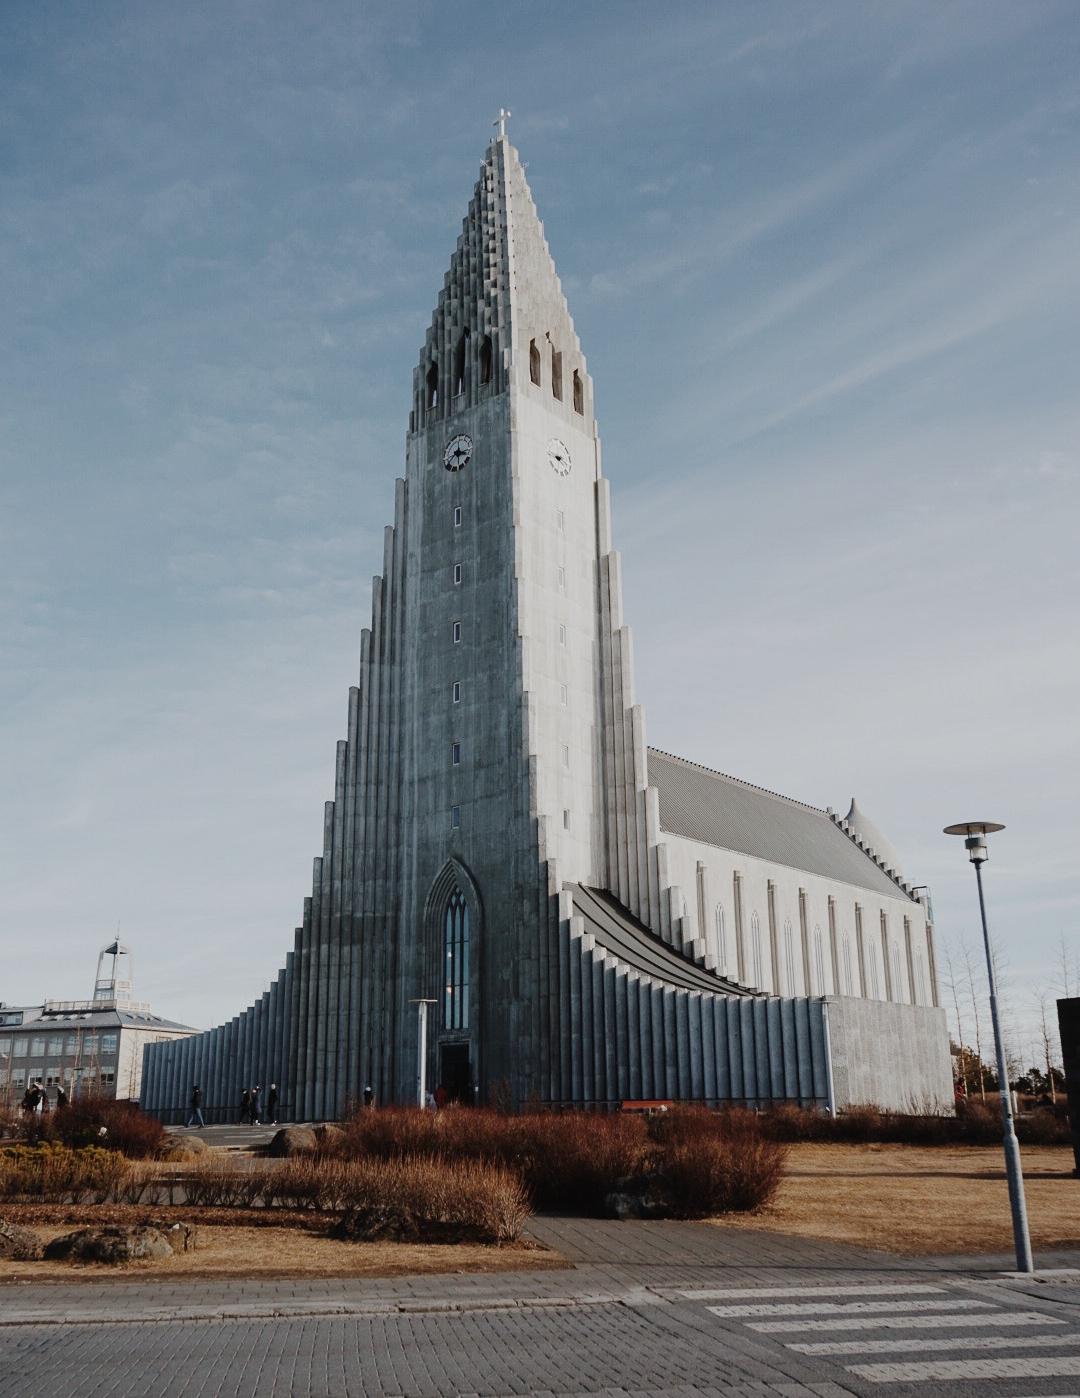 A very tall and grey church called Hallgrimskirkja church in Reykjavik Iceland